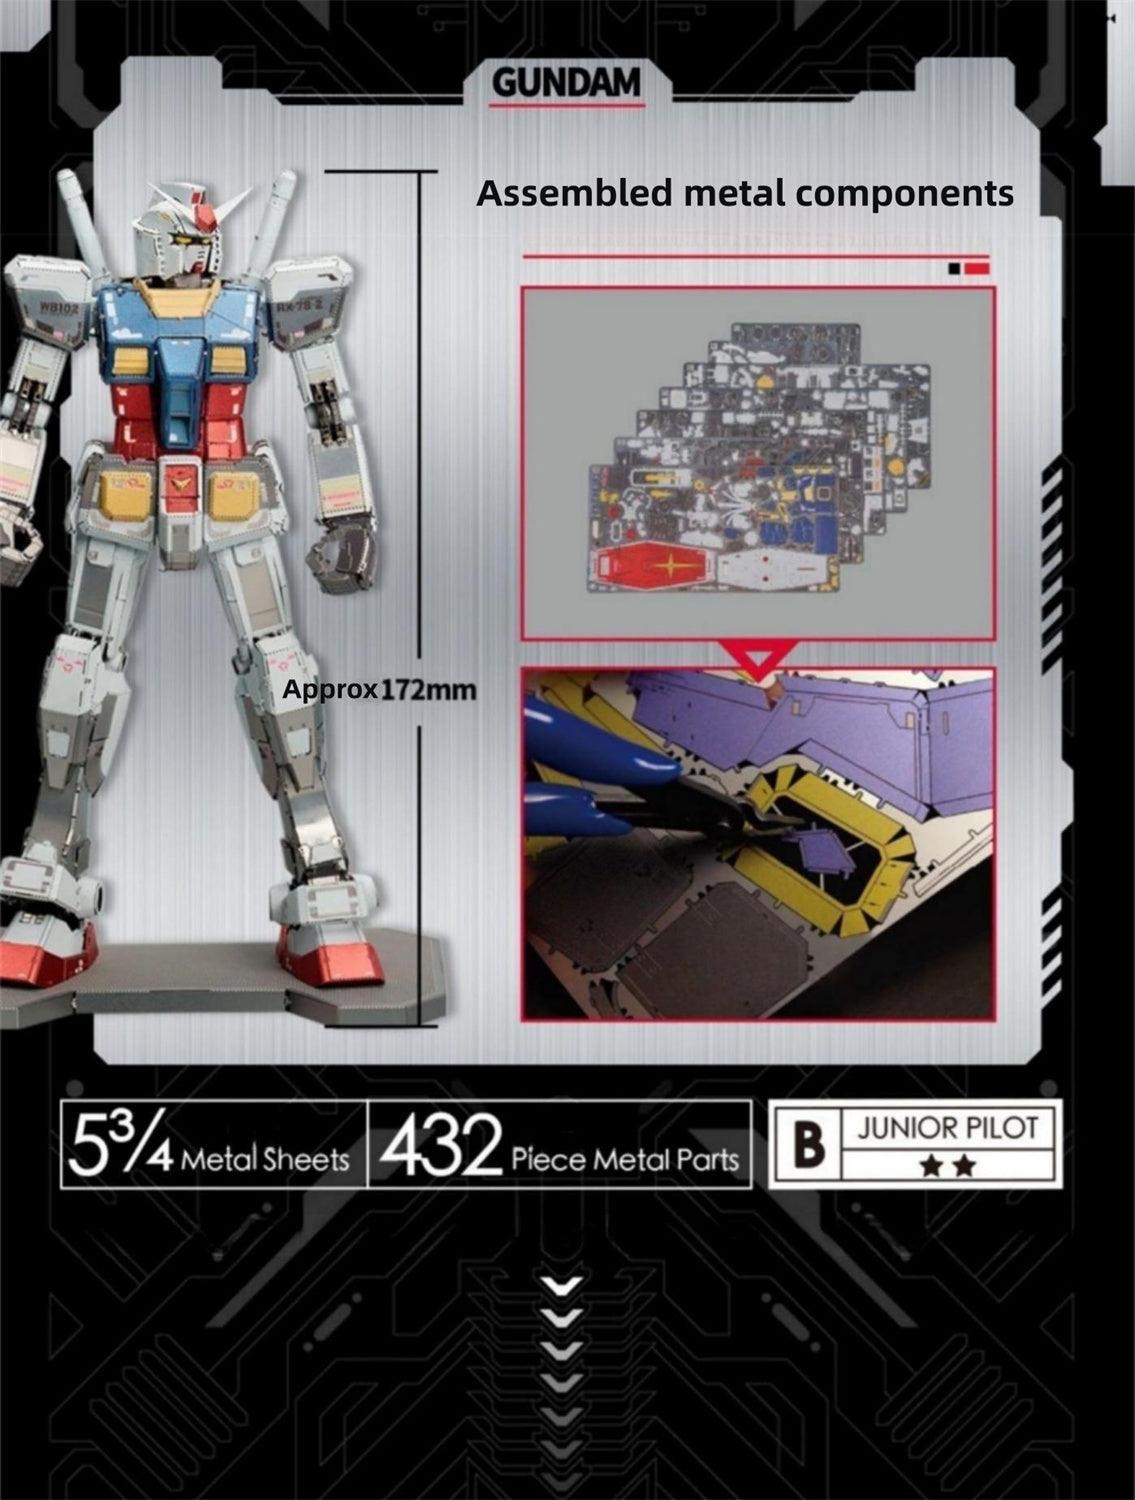 Piececool - BN Metal Works RX-78-2 Gundam GFT Metal Assembly Kit